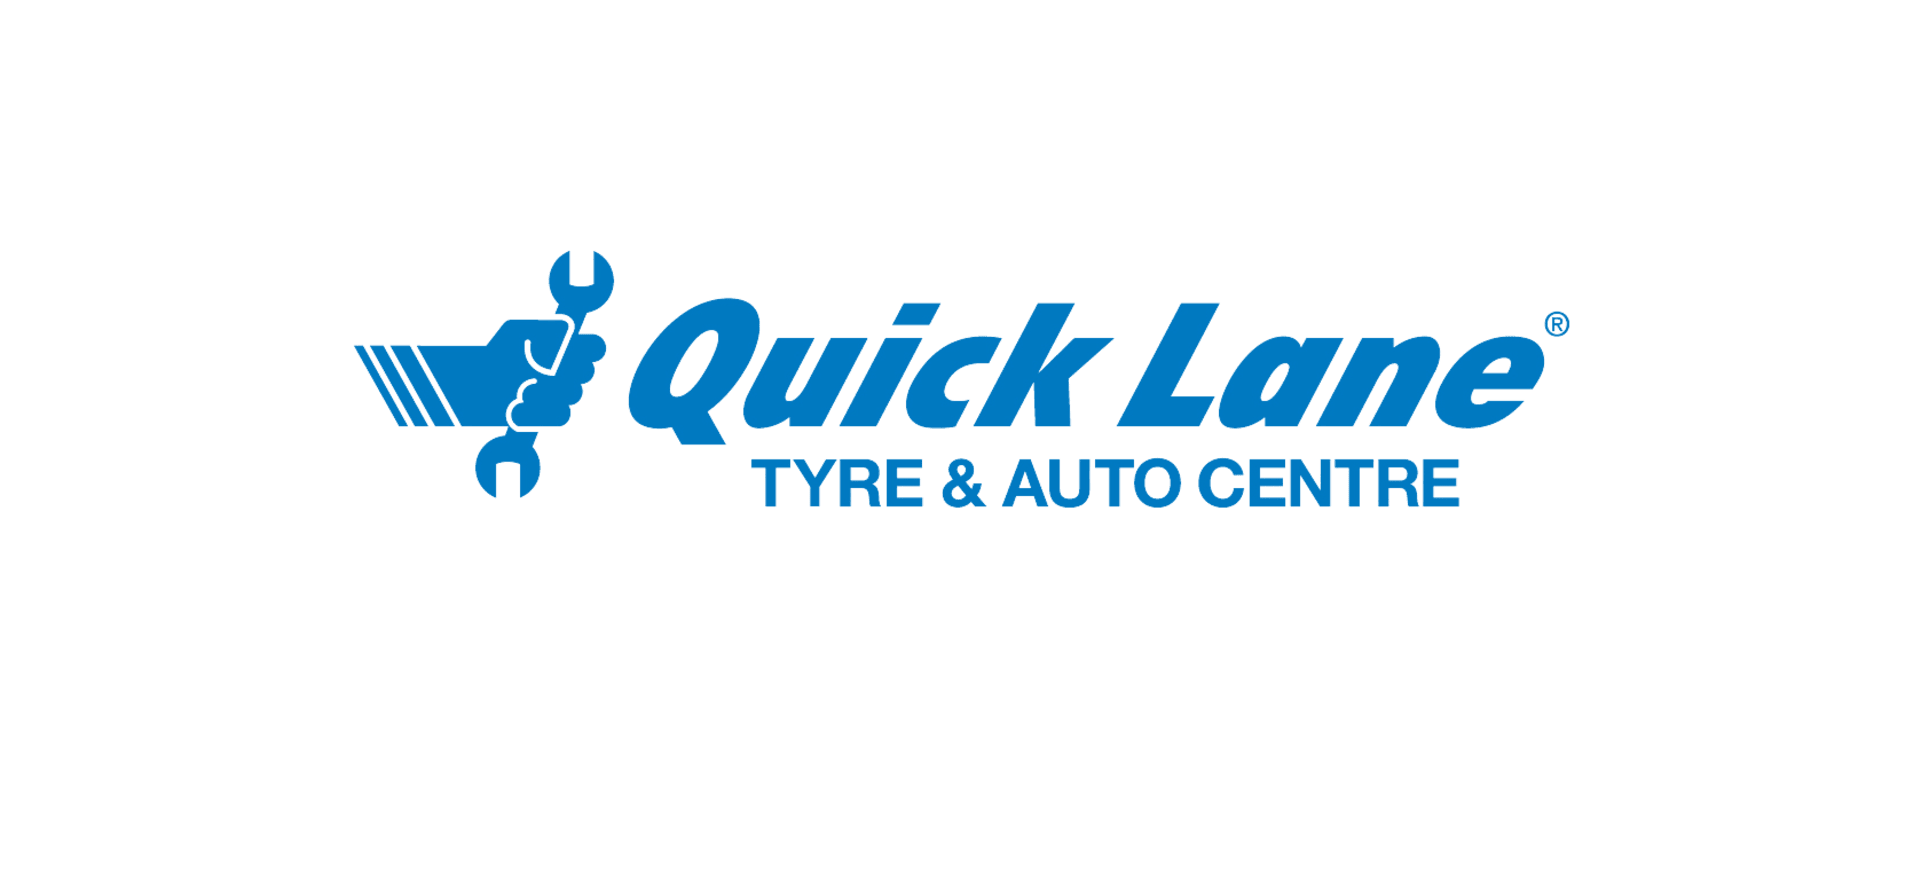 Quick Lane